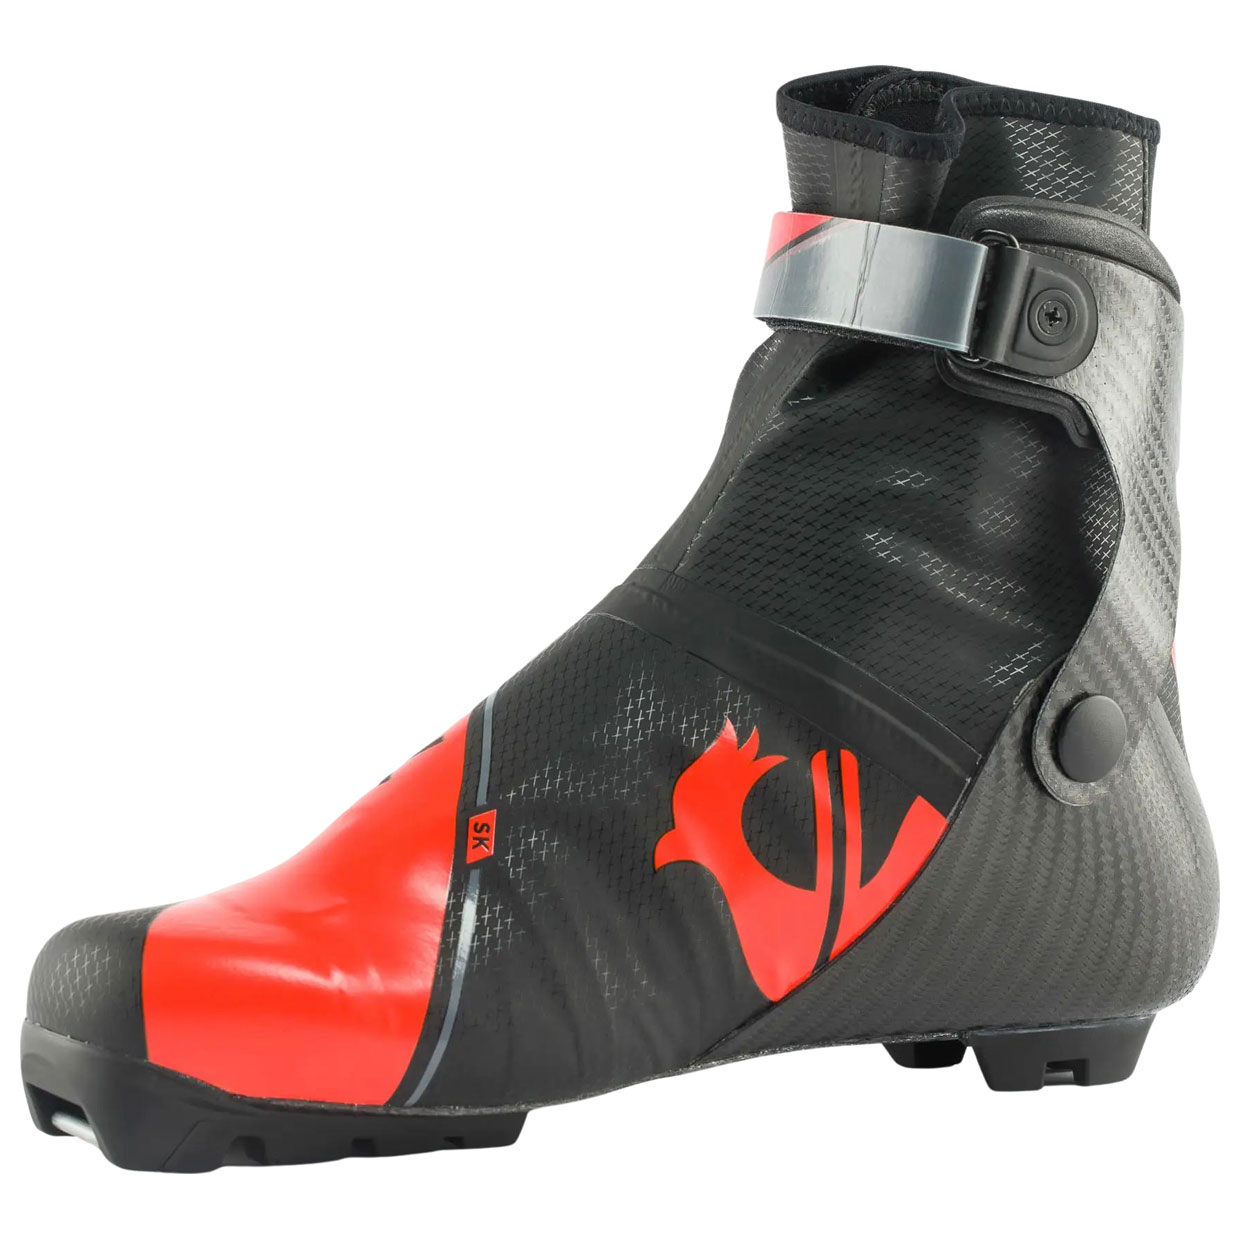 Herren Langlaufschuhe X-Ium Carbon Premium Skate